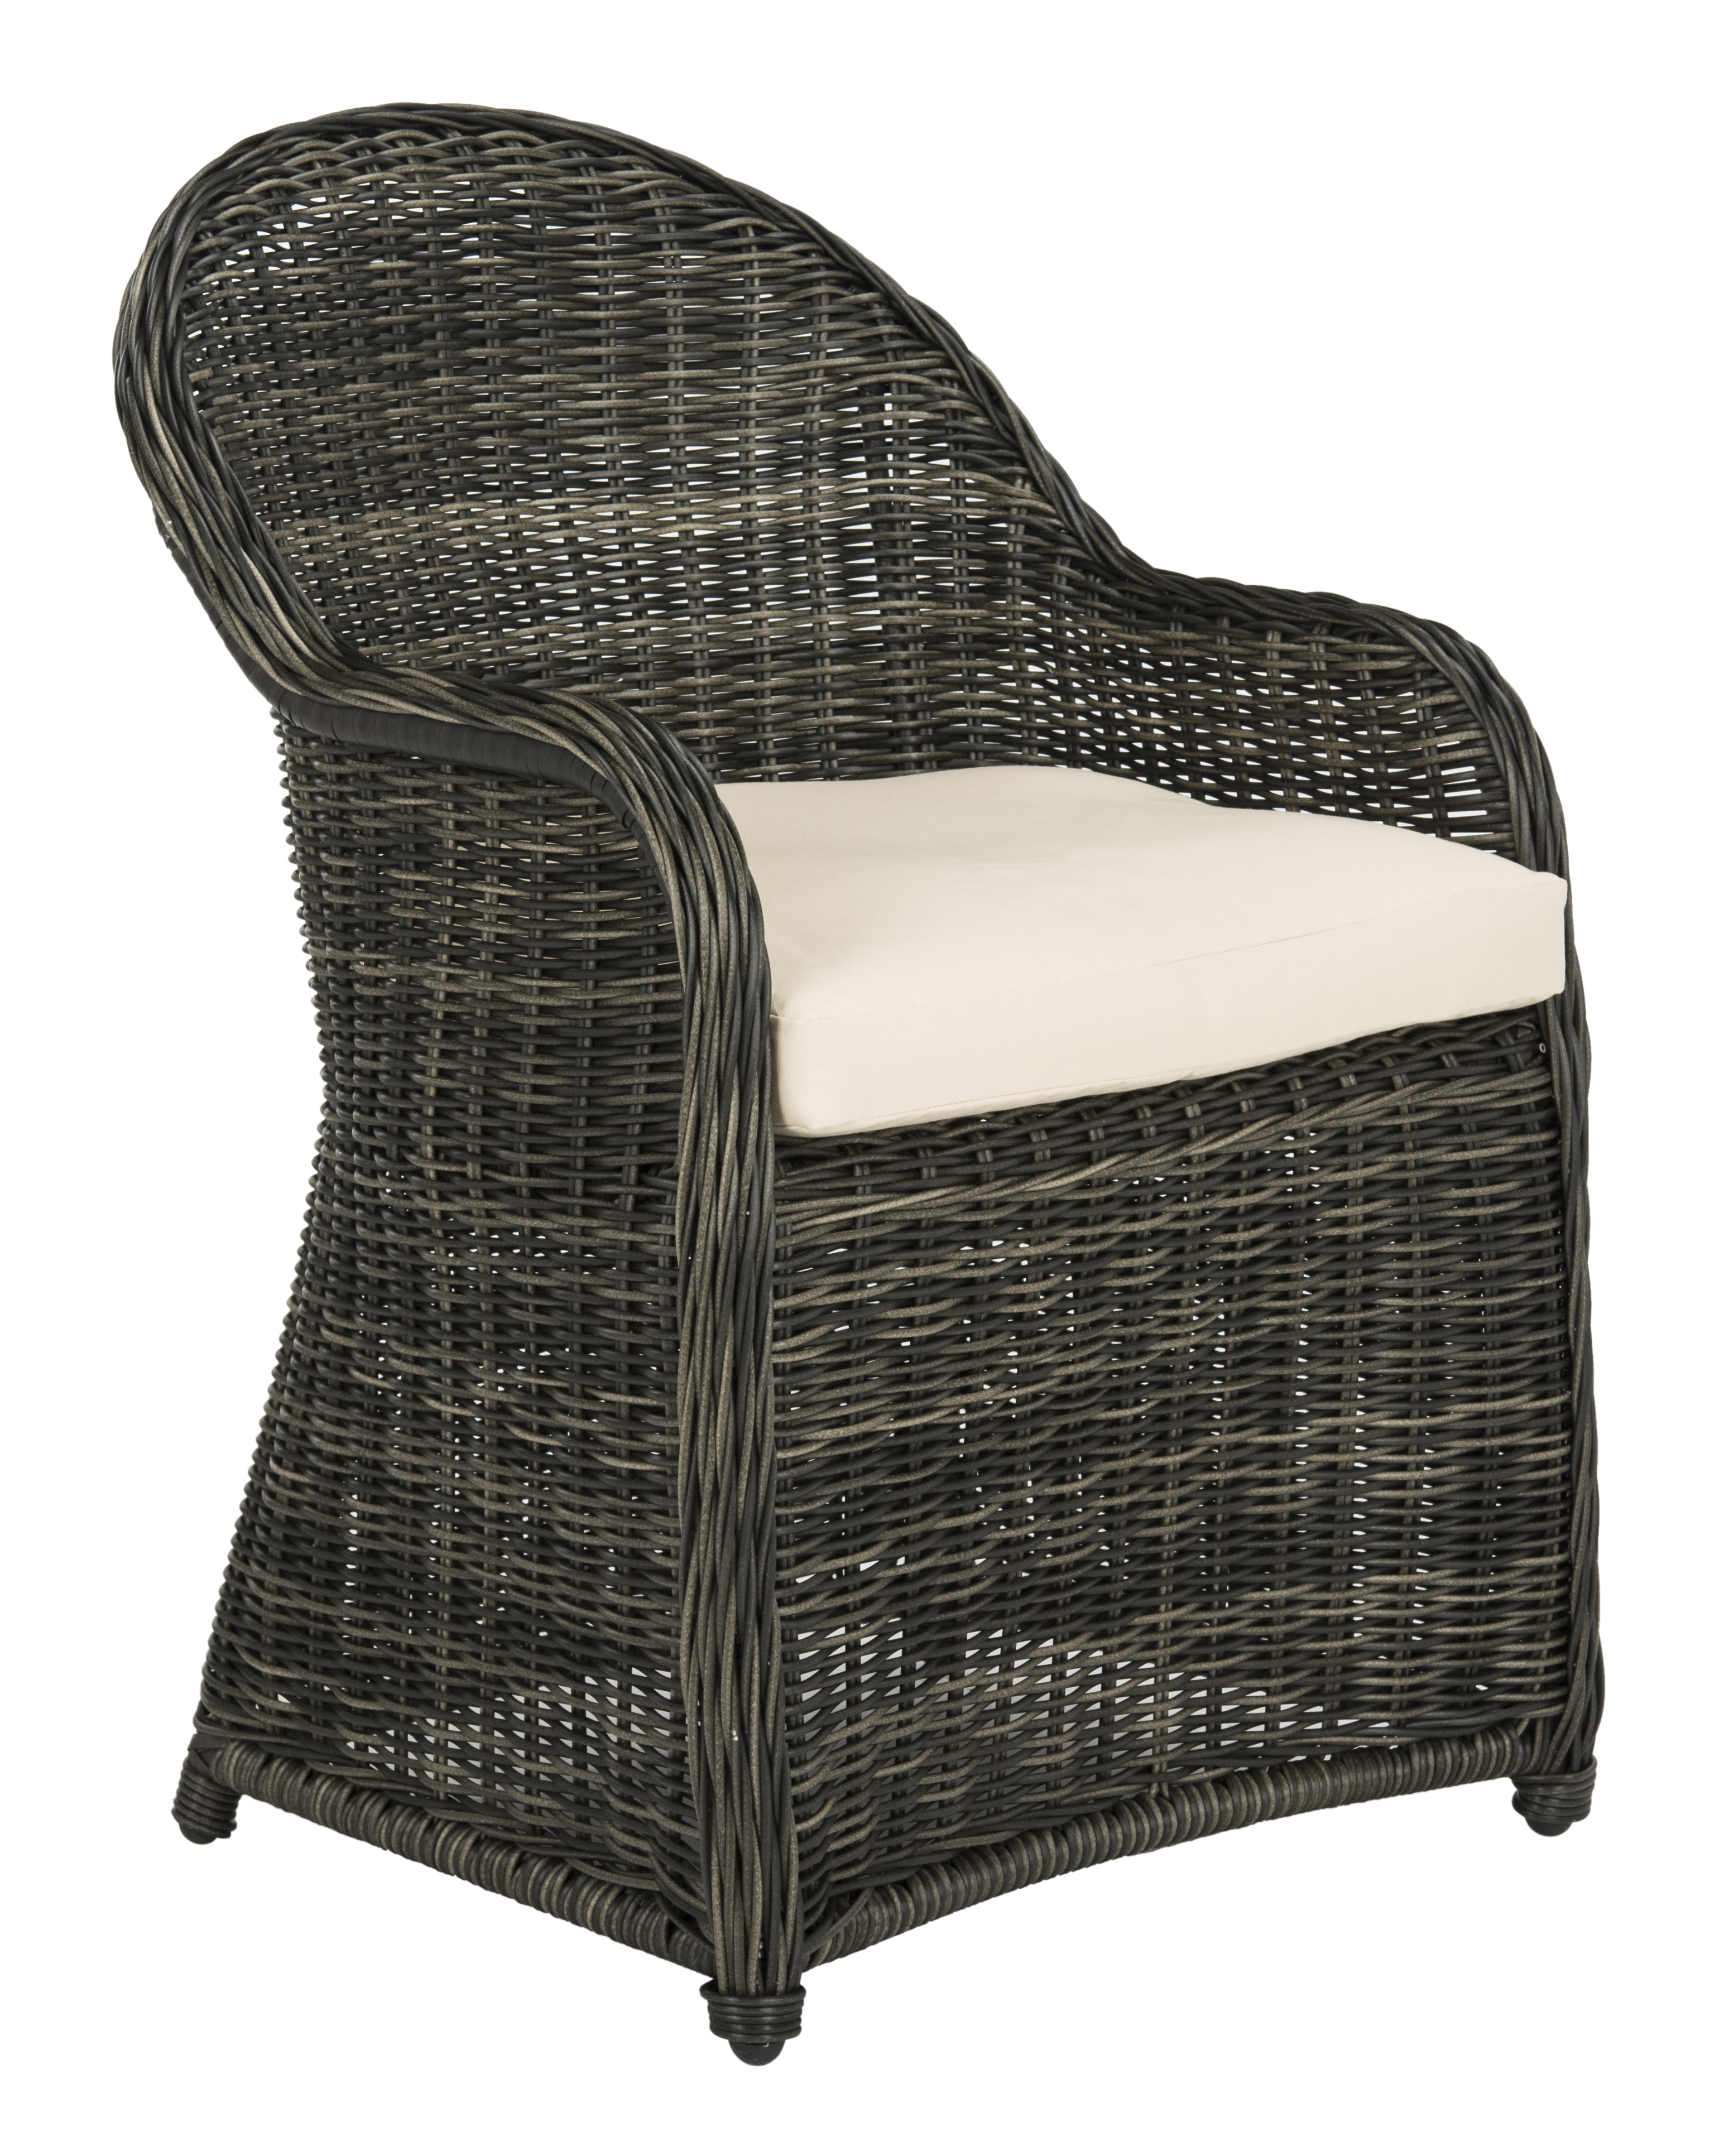 Newton Wicker Arm Chair With Cushion - Grey/Beige - Arlo Home - Image 1